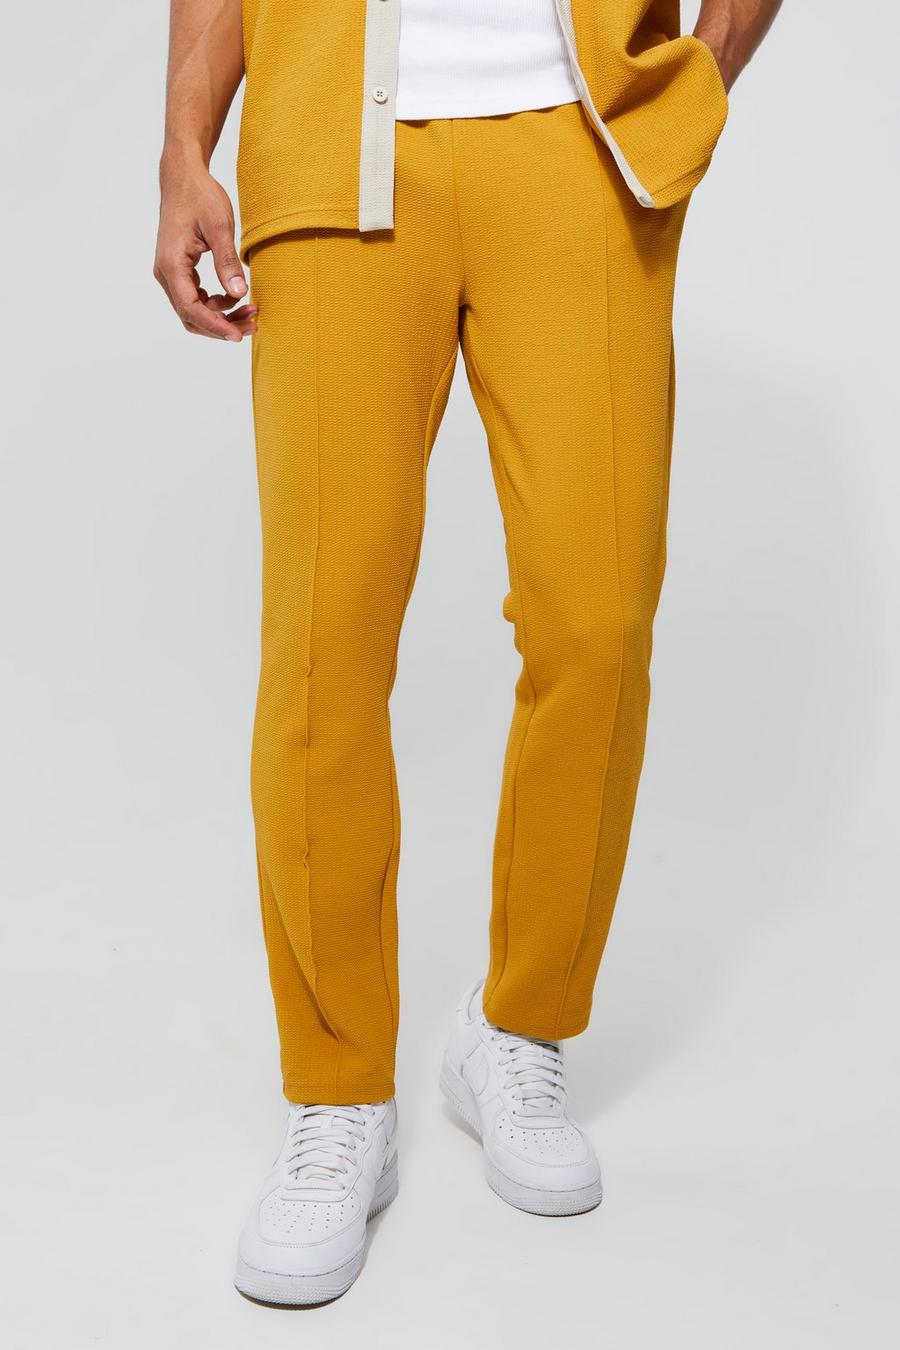 Mustard yellow Elasticated Skinny Jersey Textured Trouser